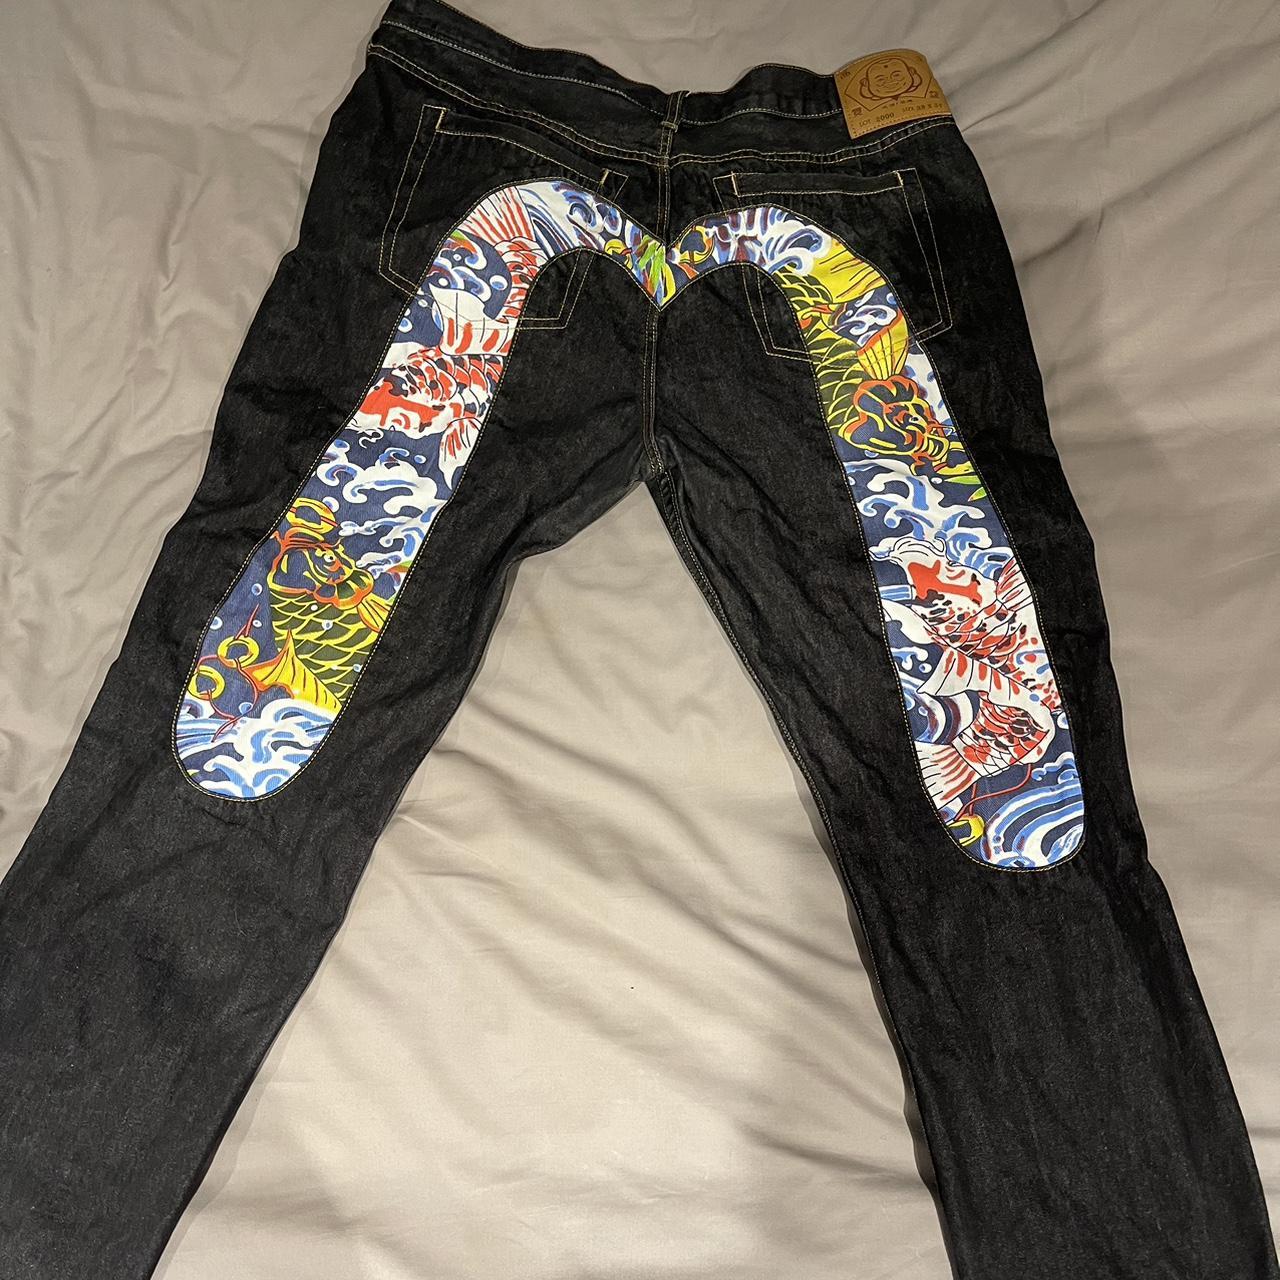 Evisu Jeans Evisu koi dark denim jeans. Selling as... - Depop